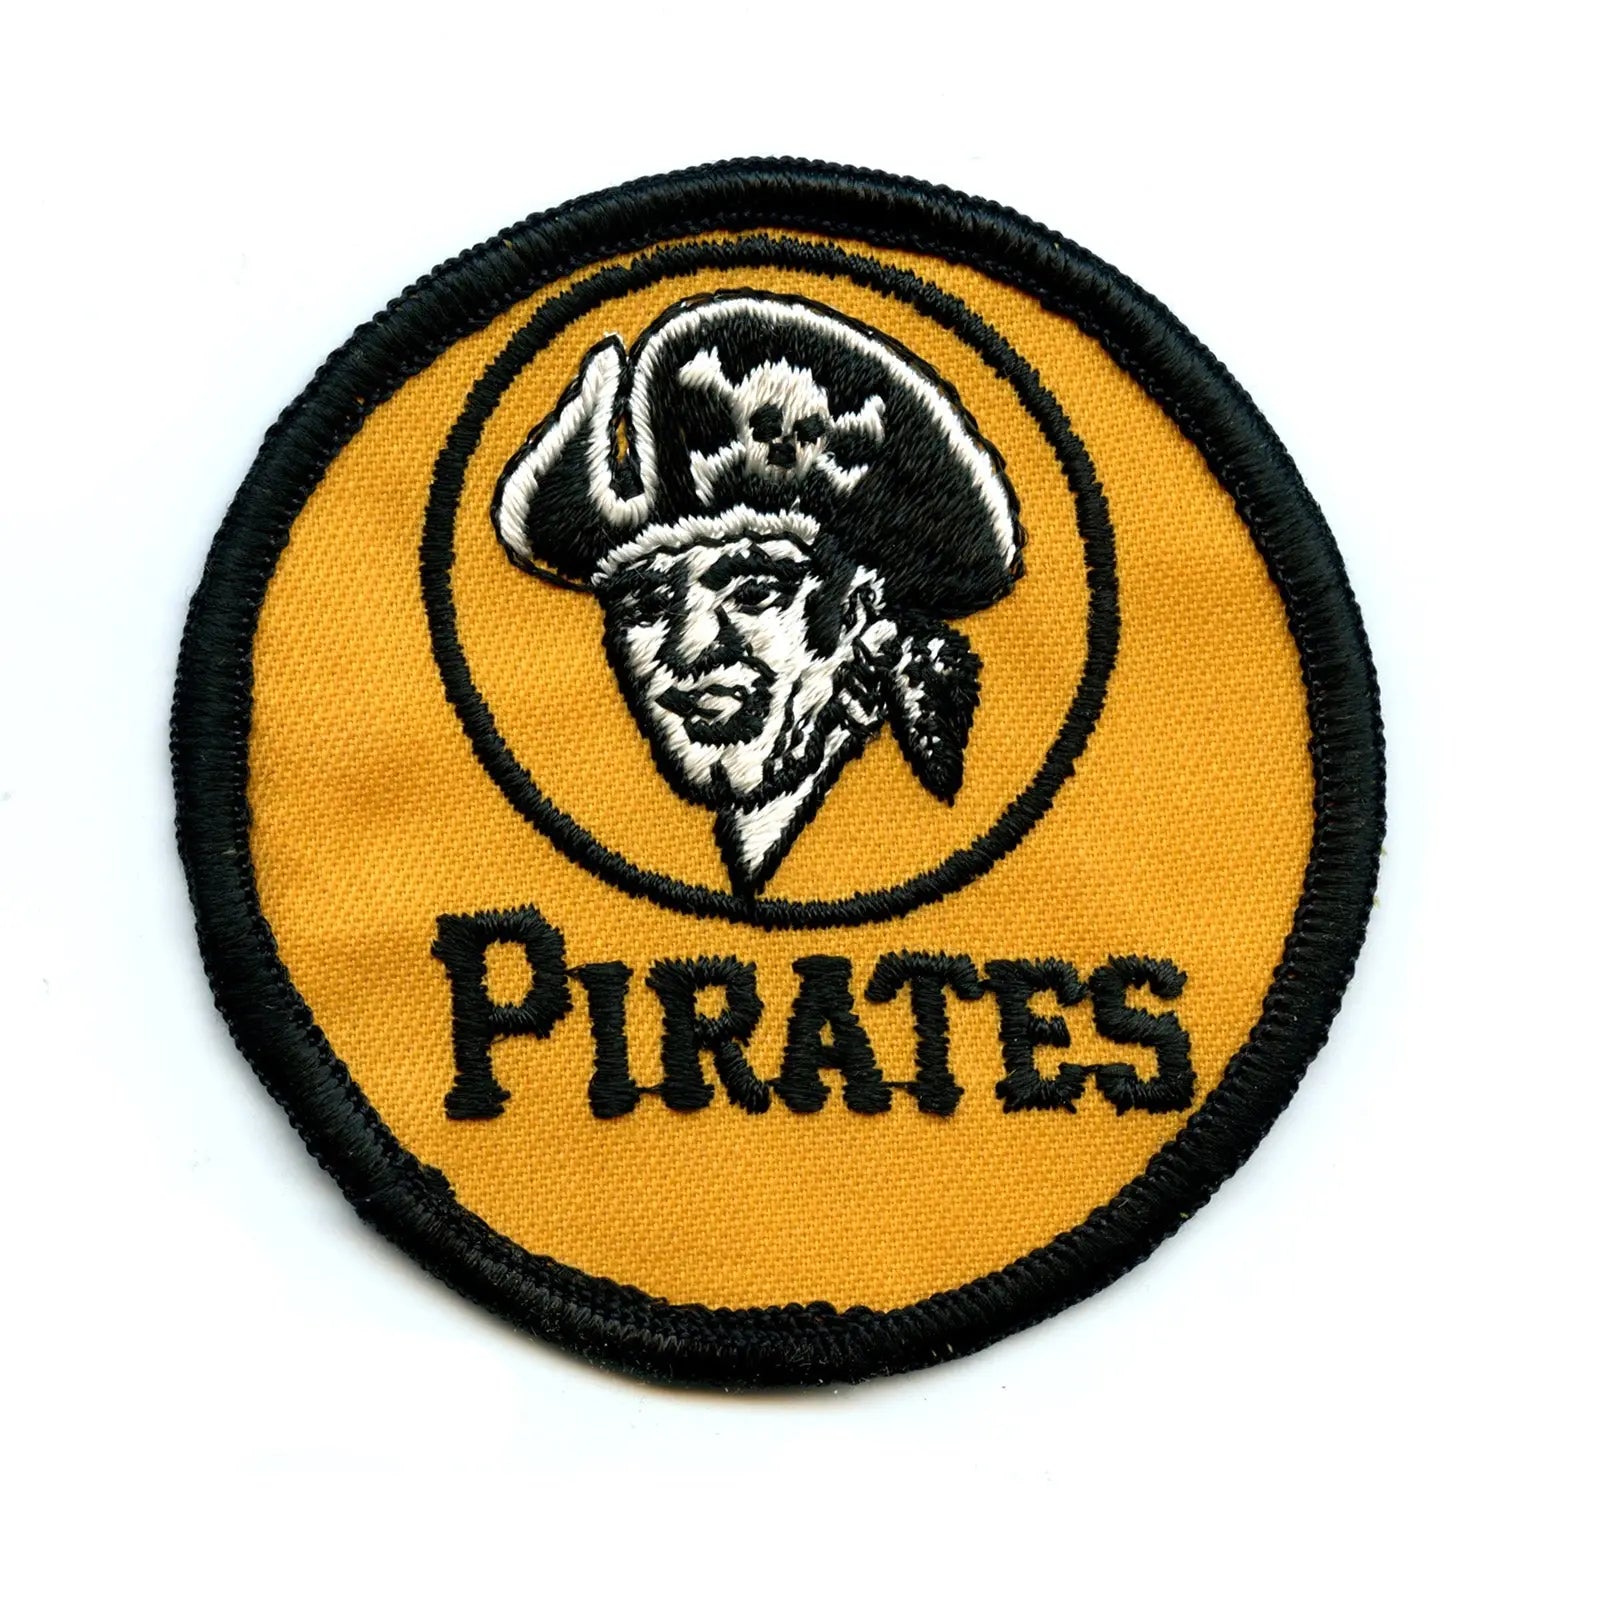 1970'S Pittsburgh Pirates MLB Baseball Vintage Round Team Logo Patch 